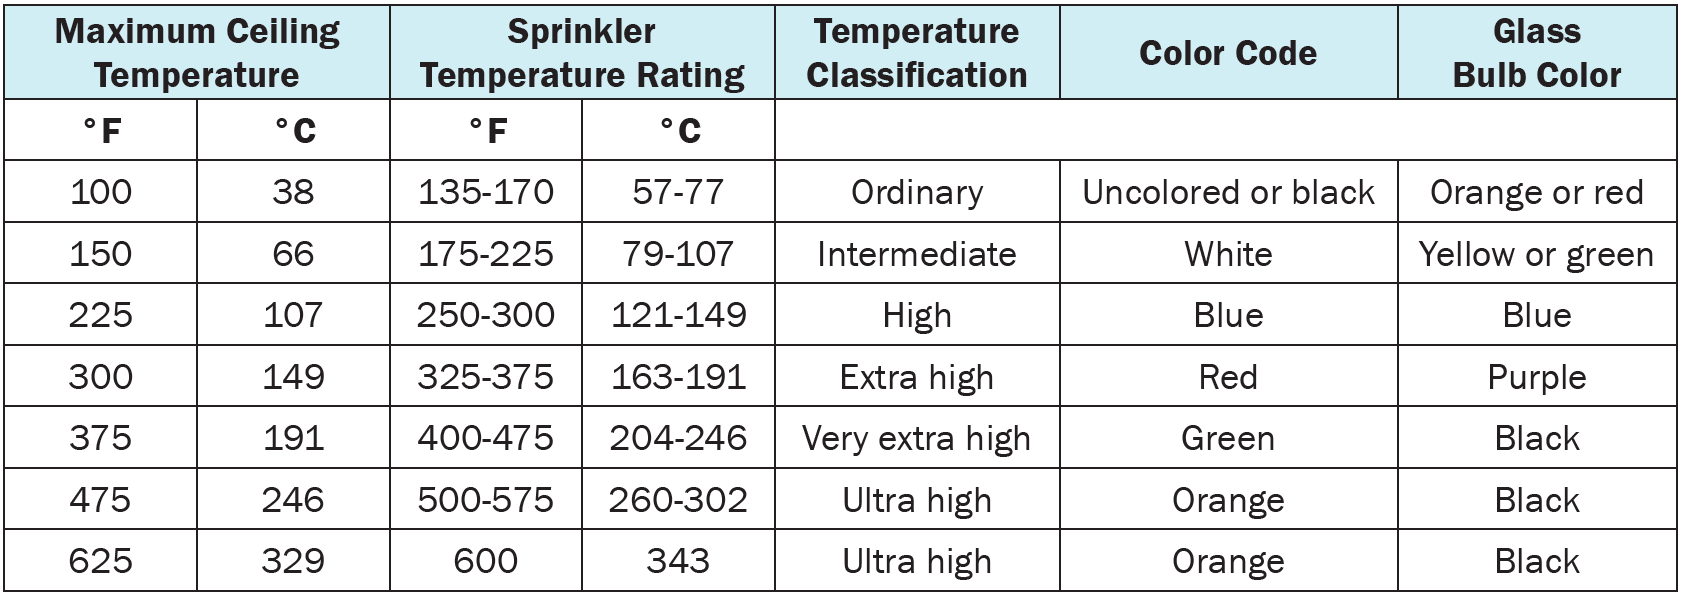 Sprinkler Head Temperature Color Chart